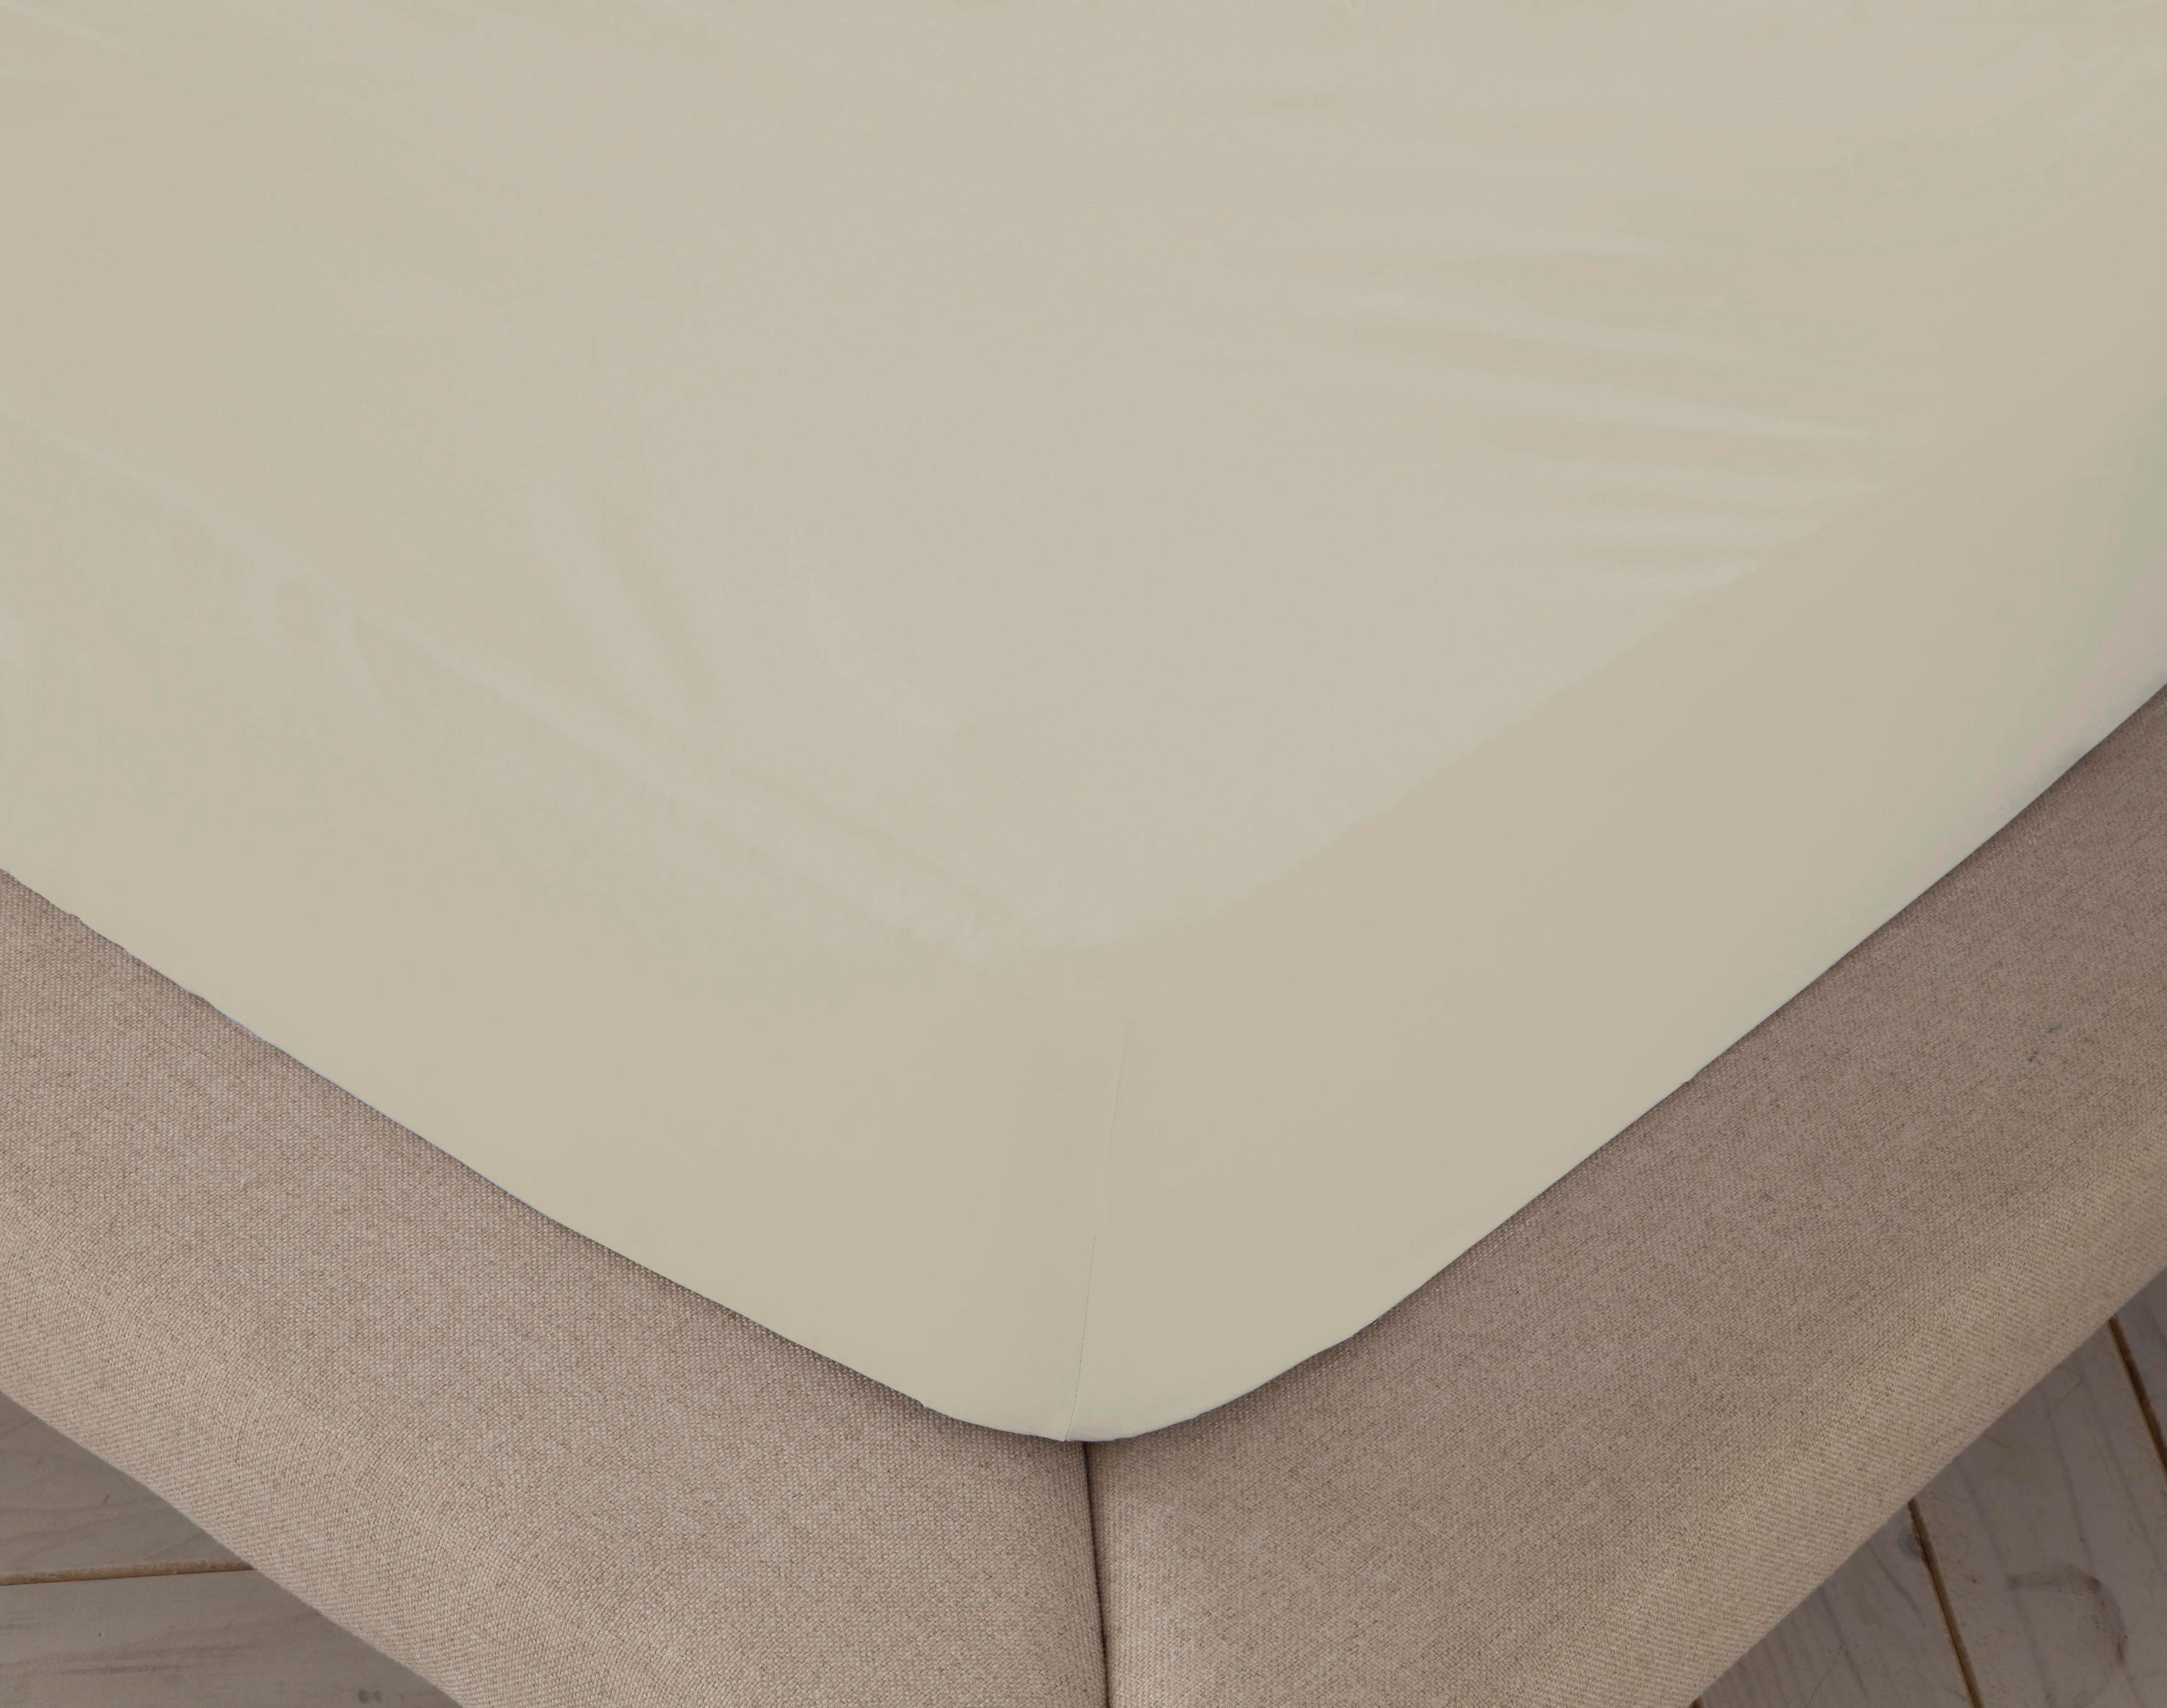 Sábana bajera ajustable lisa Natrual cama 150 cm - 150x190/200 cm, 100%  algodón.